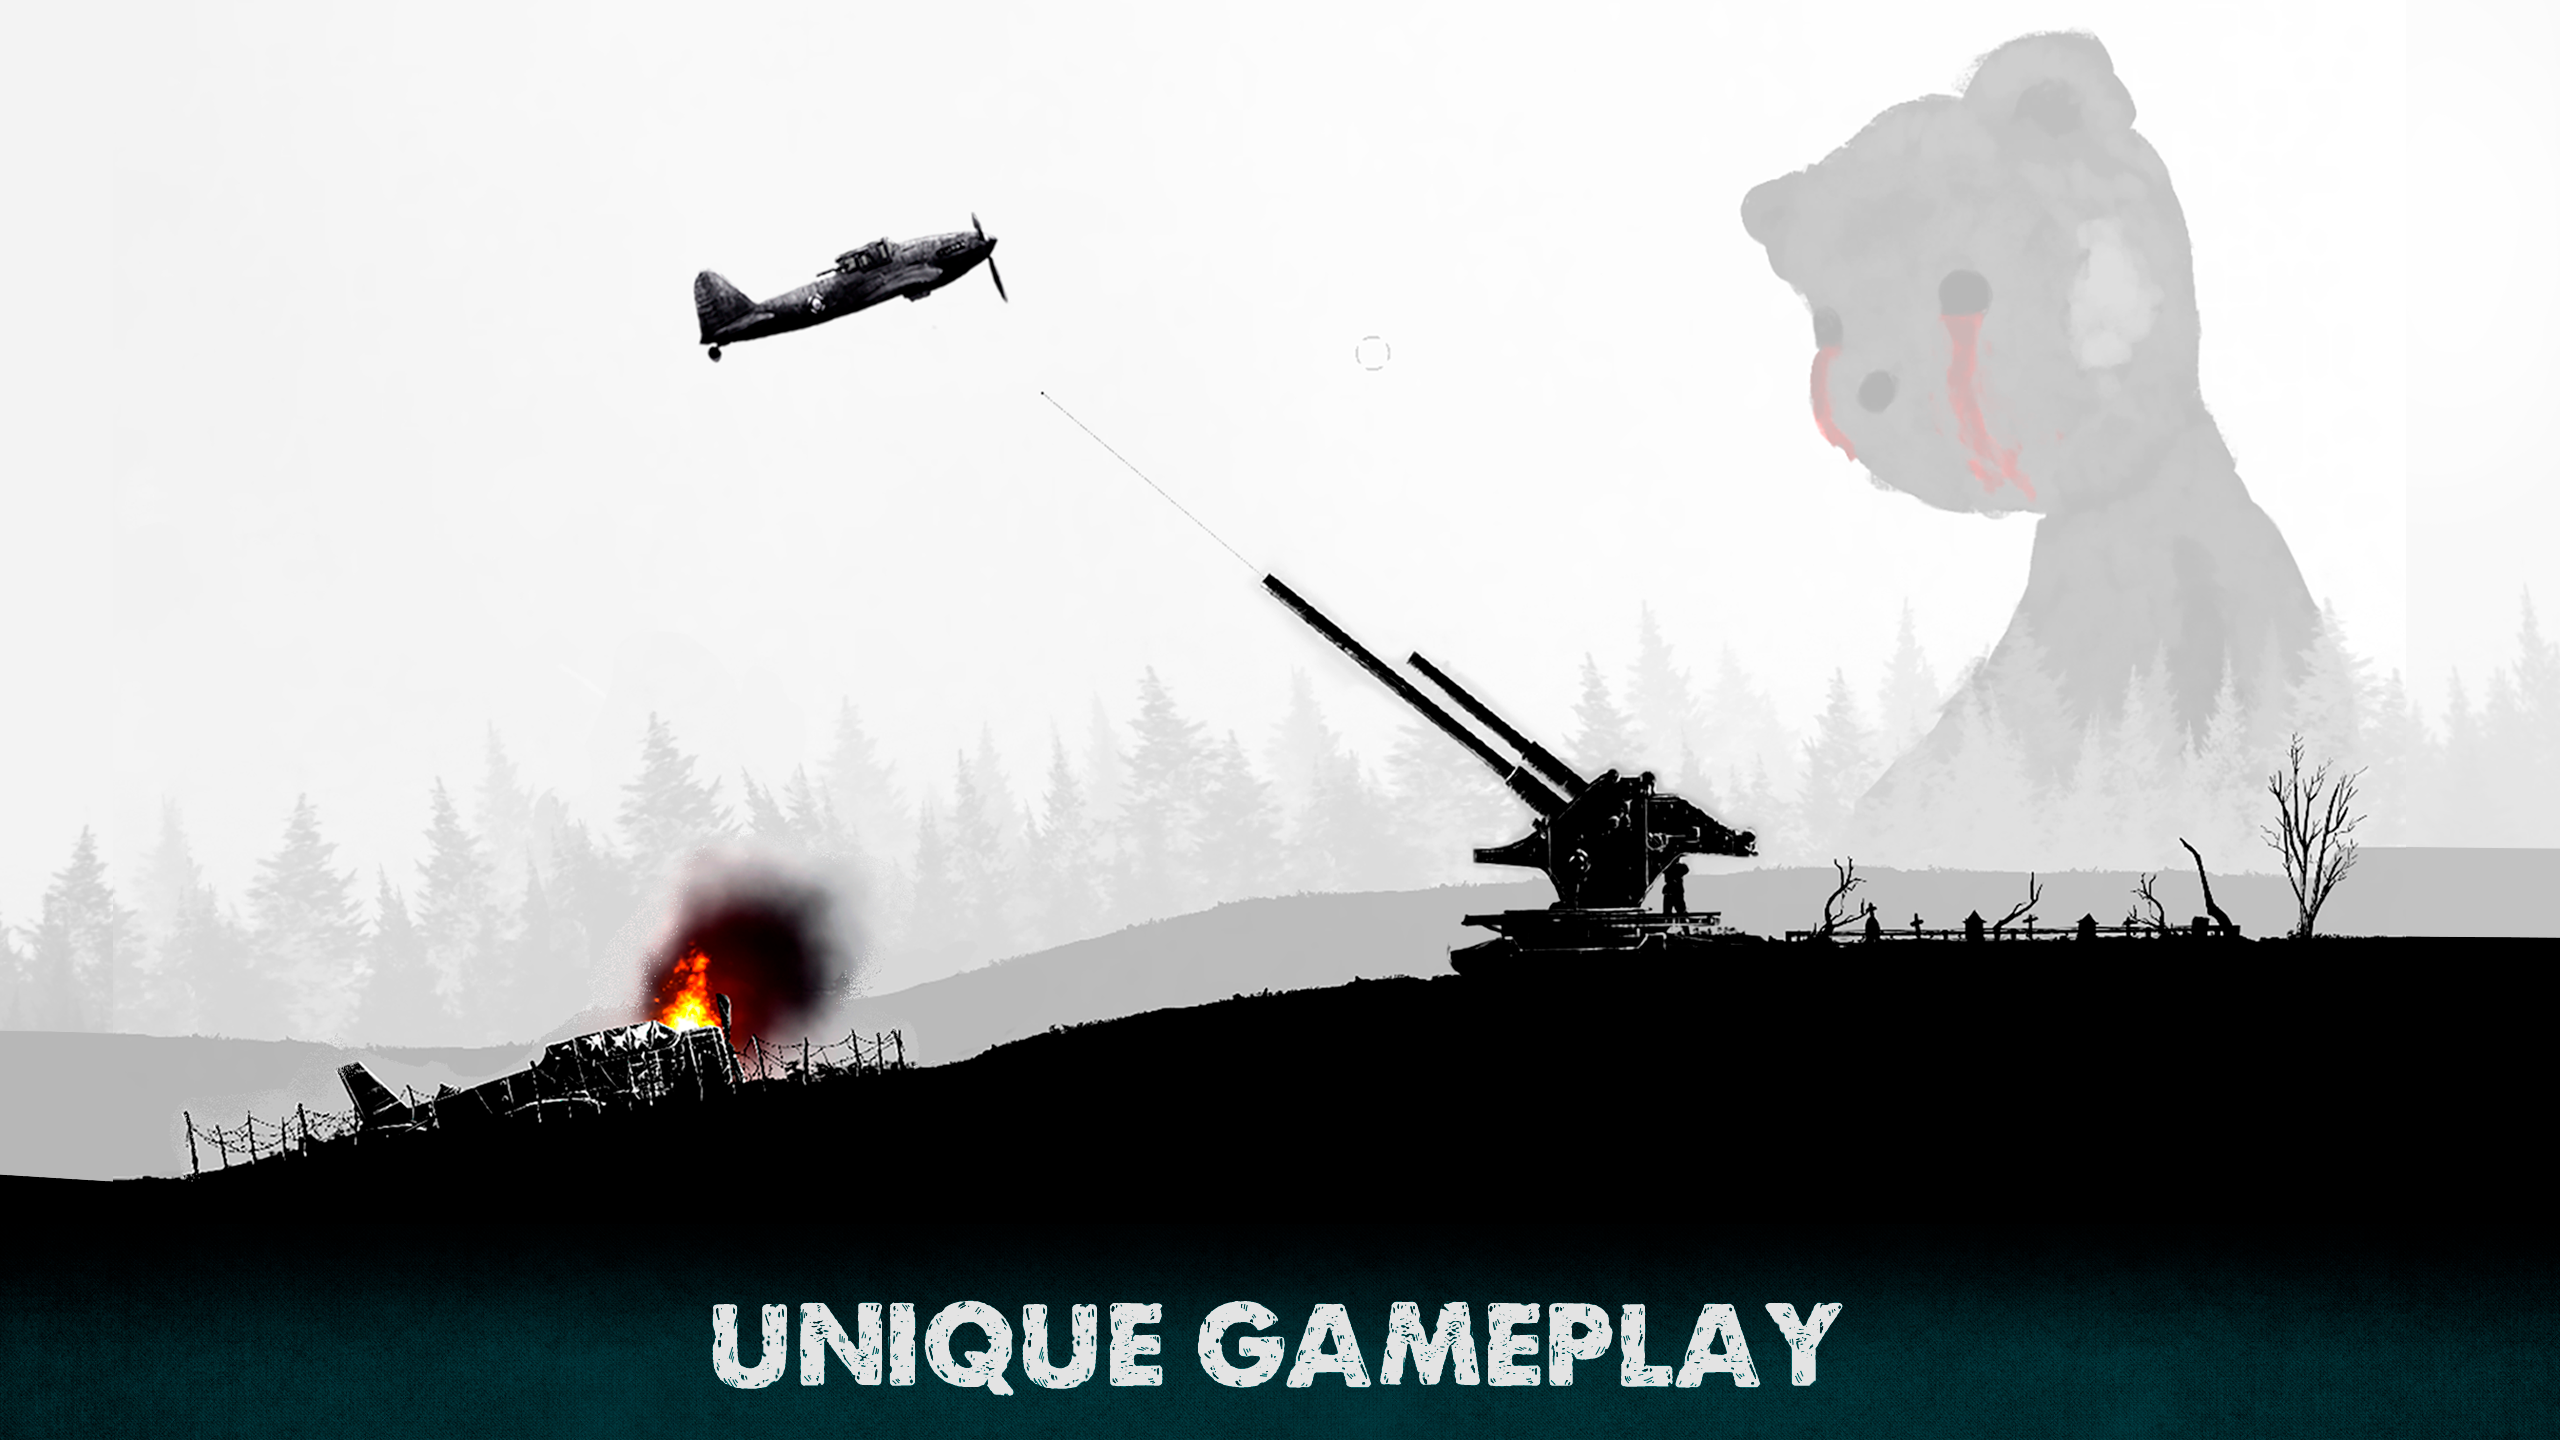 Playing War.io. War.io is the Best offline diep app and mobile game! 